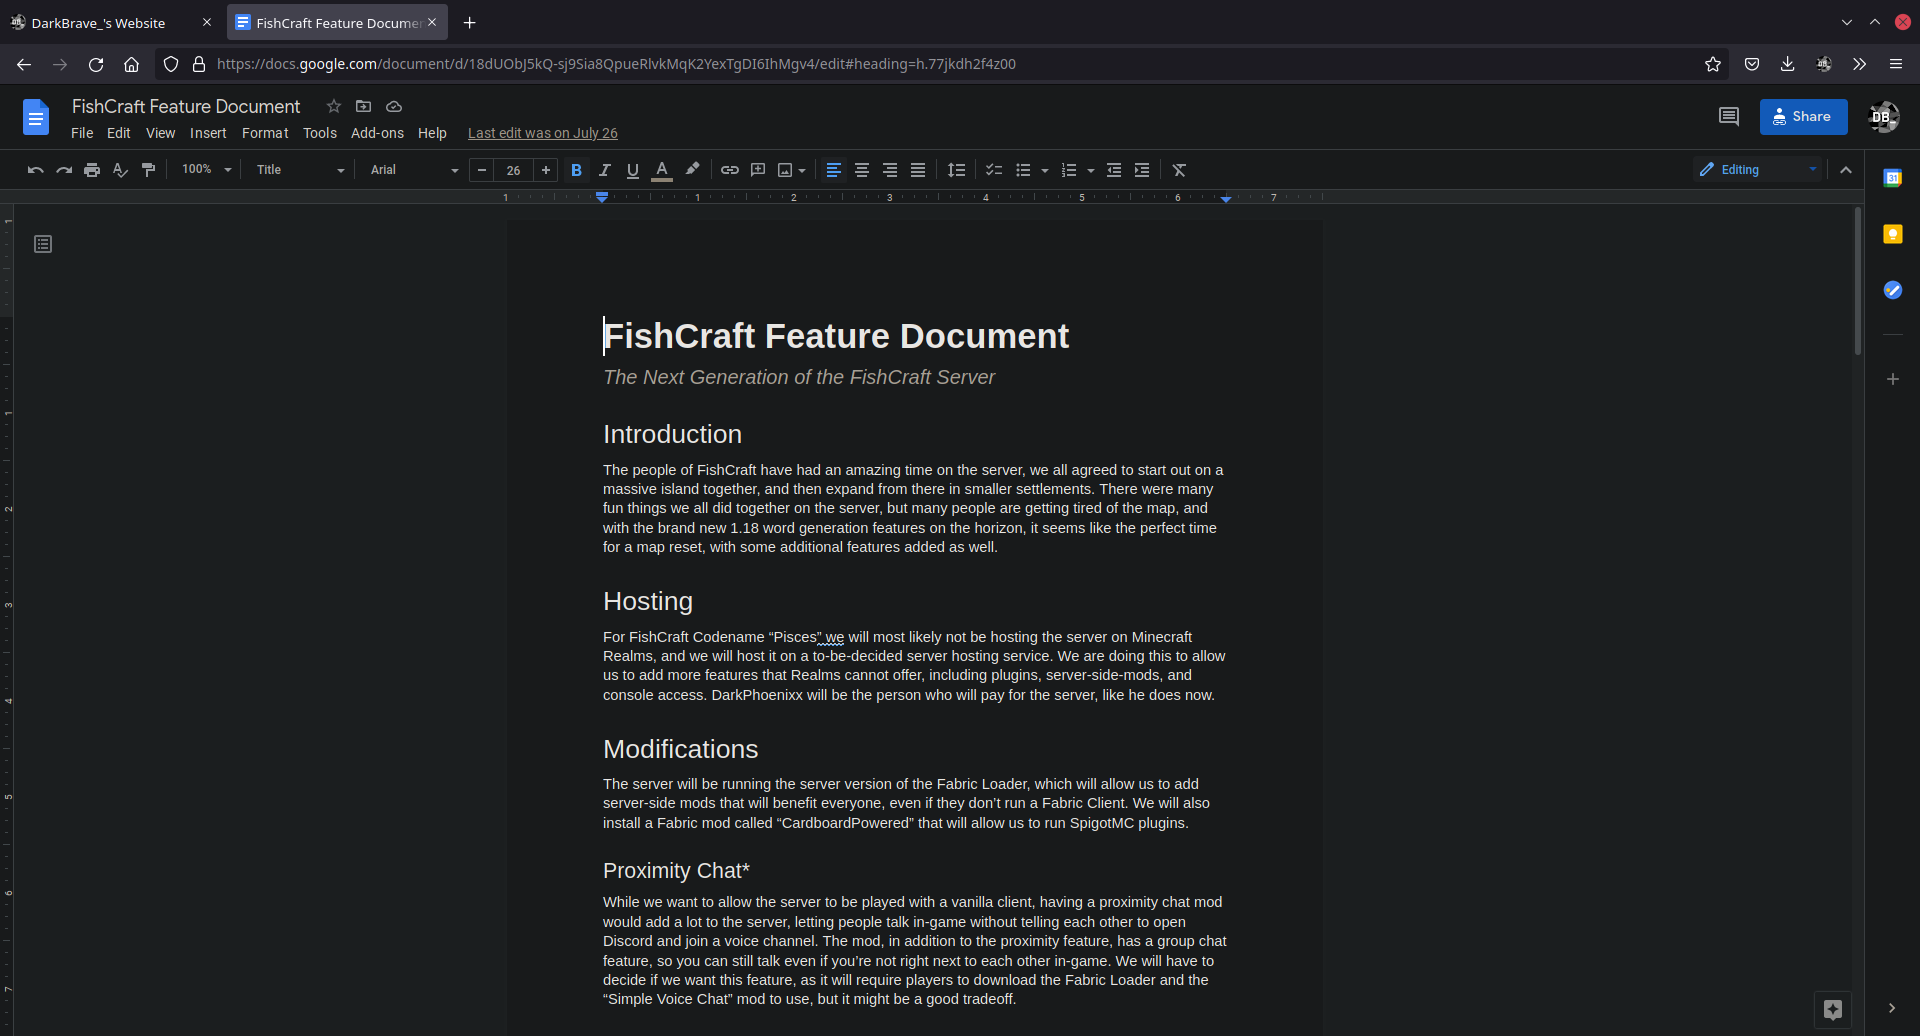 The FishCraft 2 Google Document.